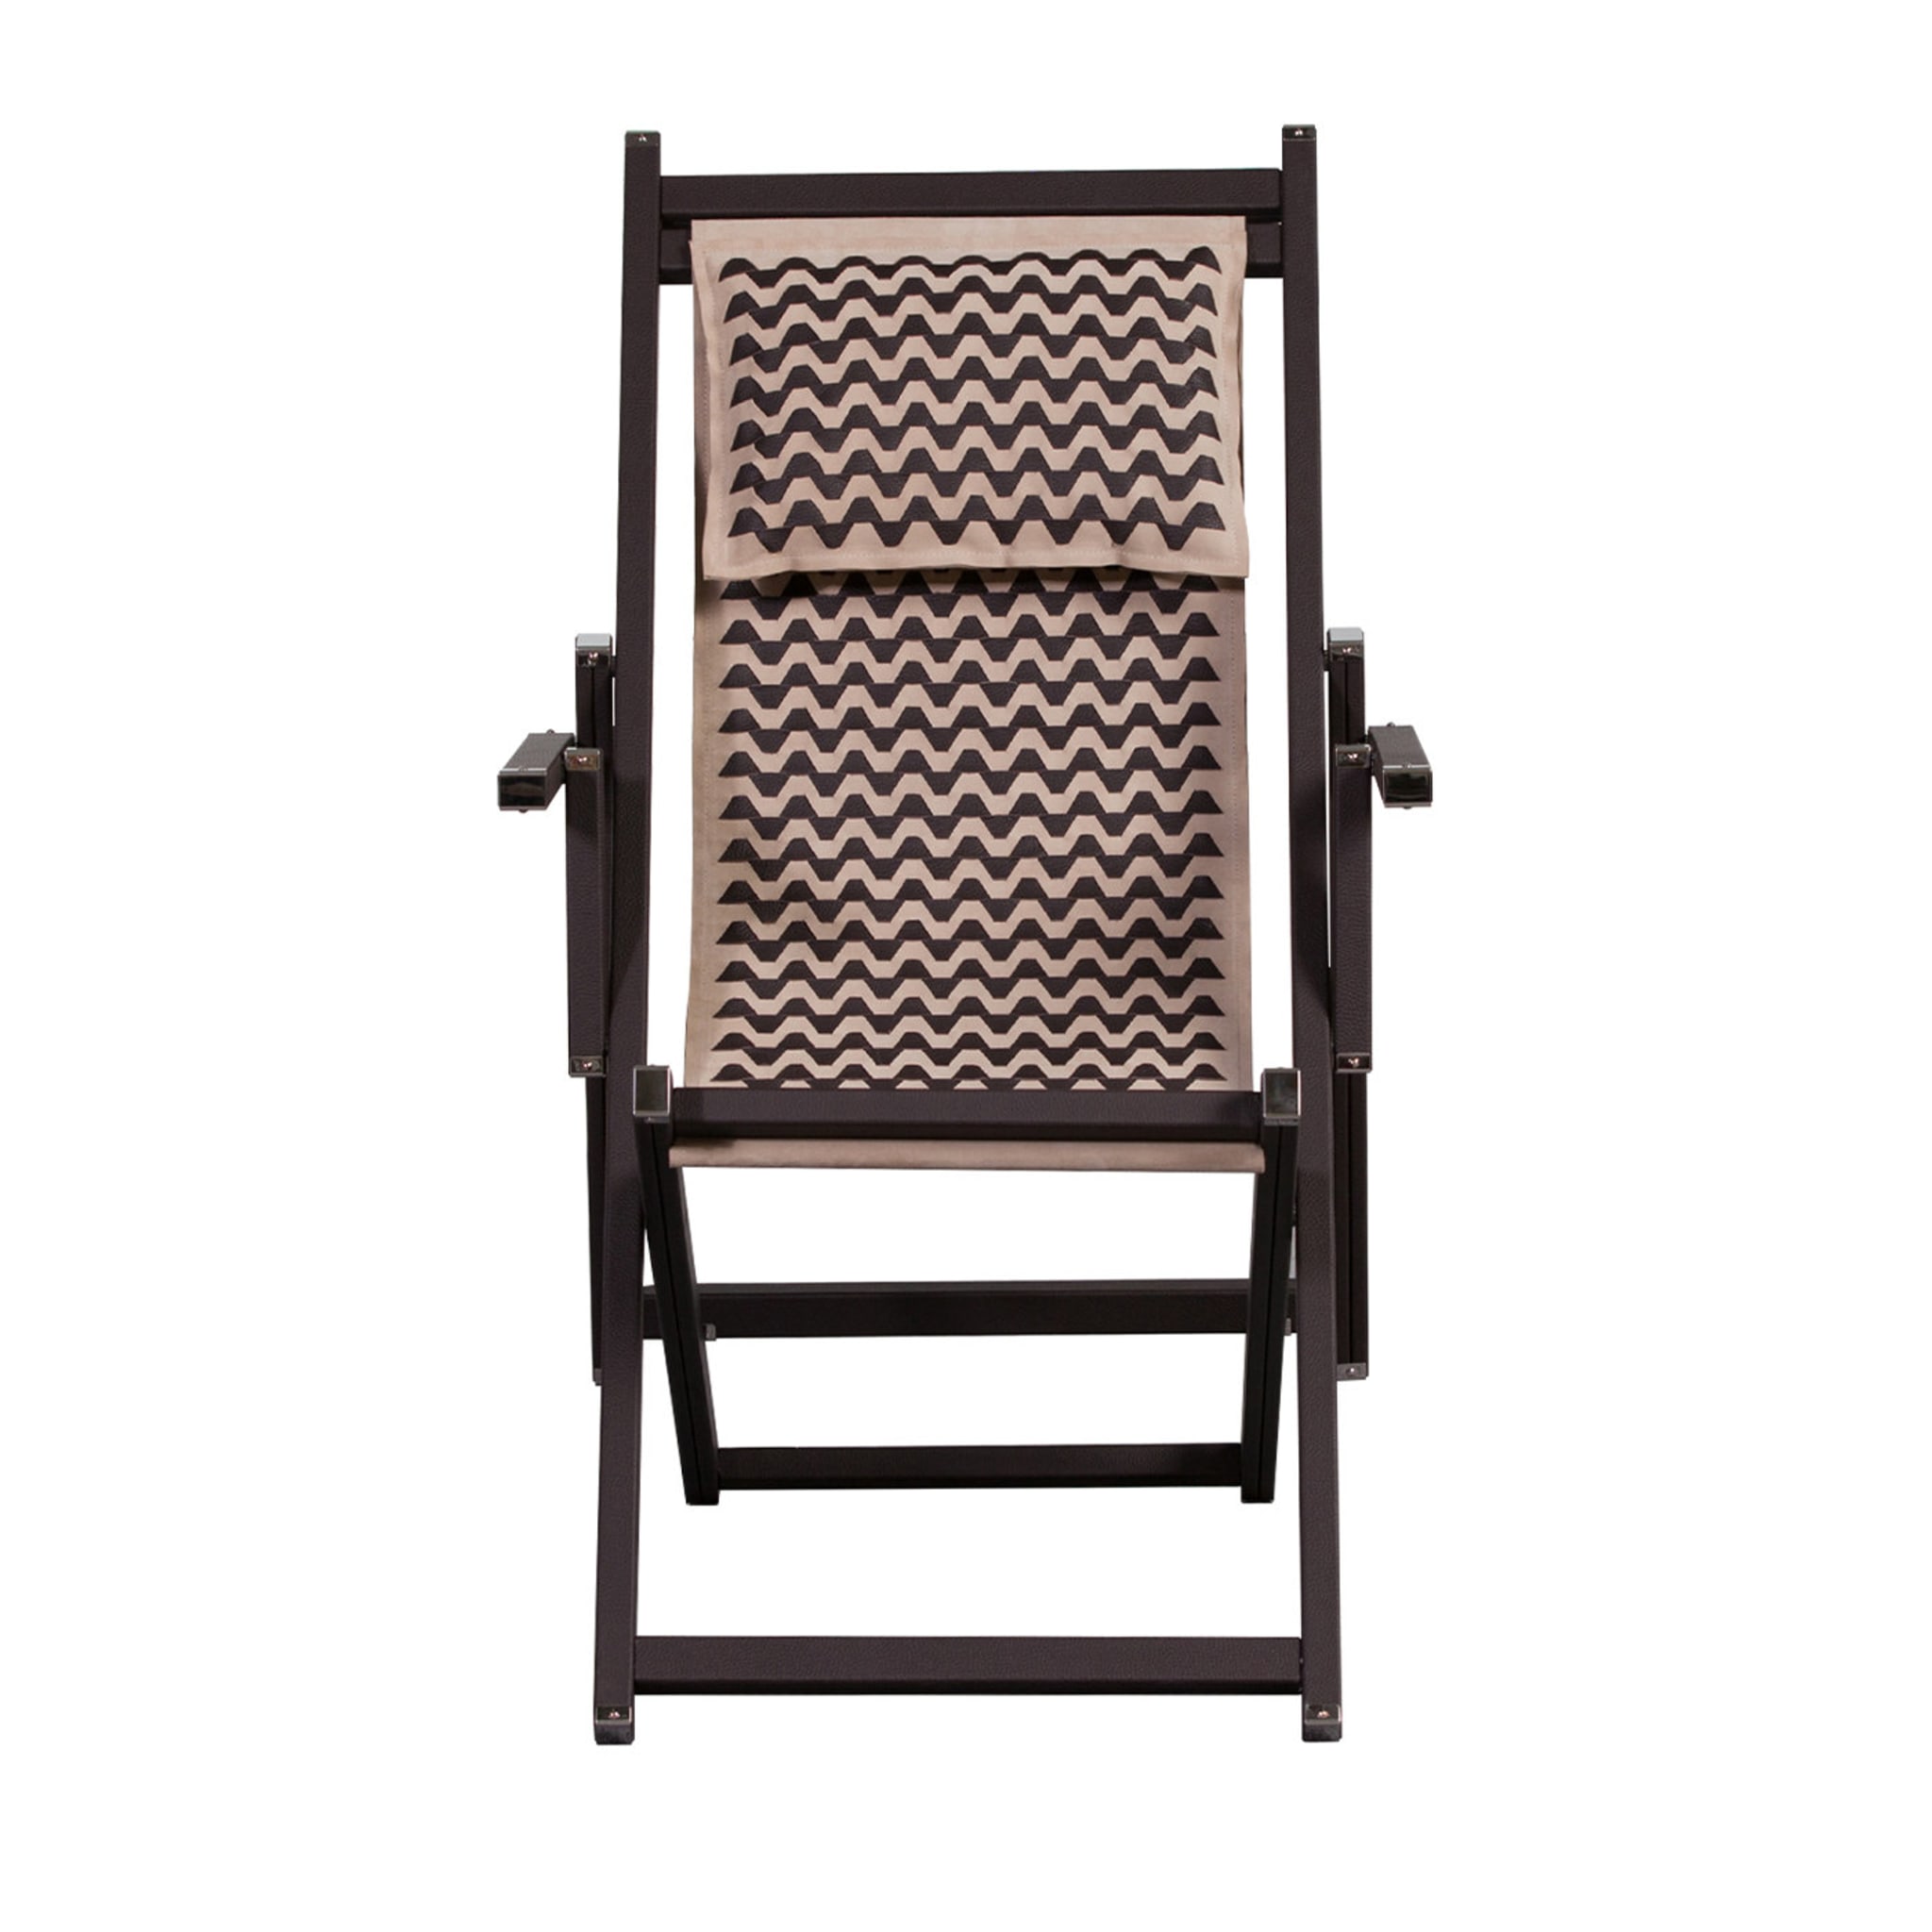 Weave Deck Chair - Main view